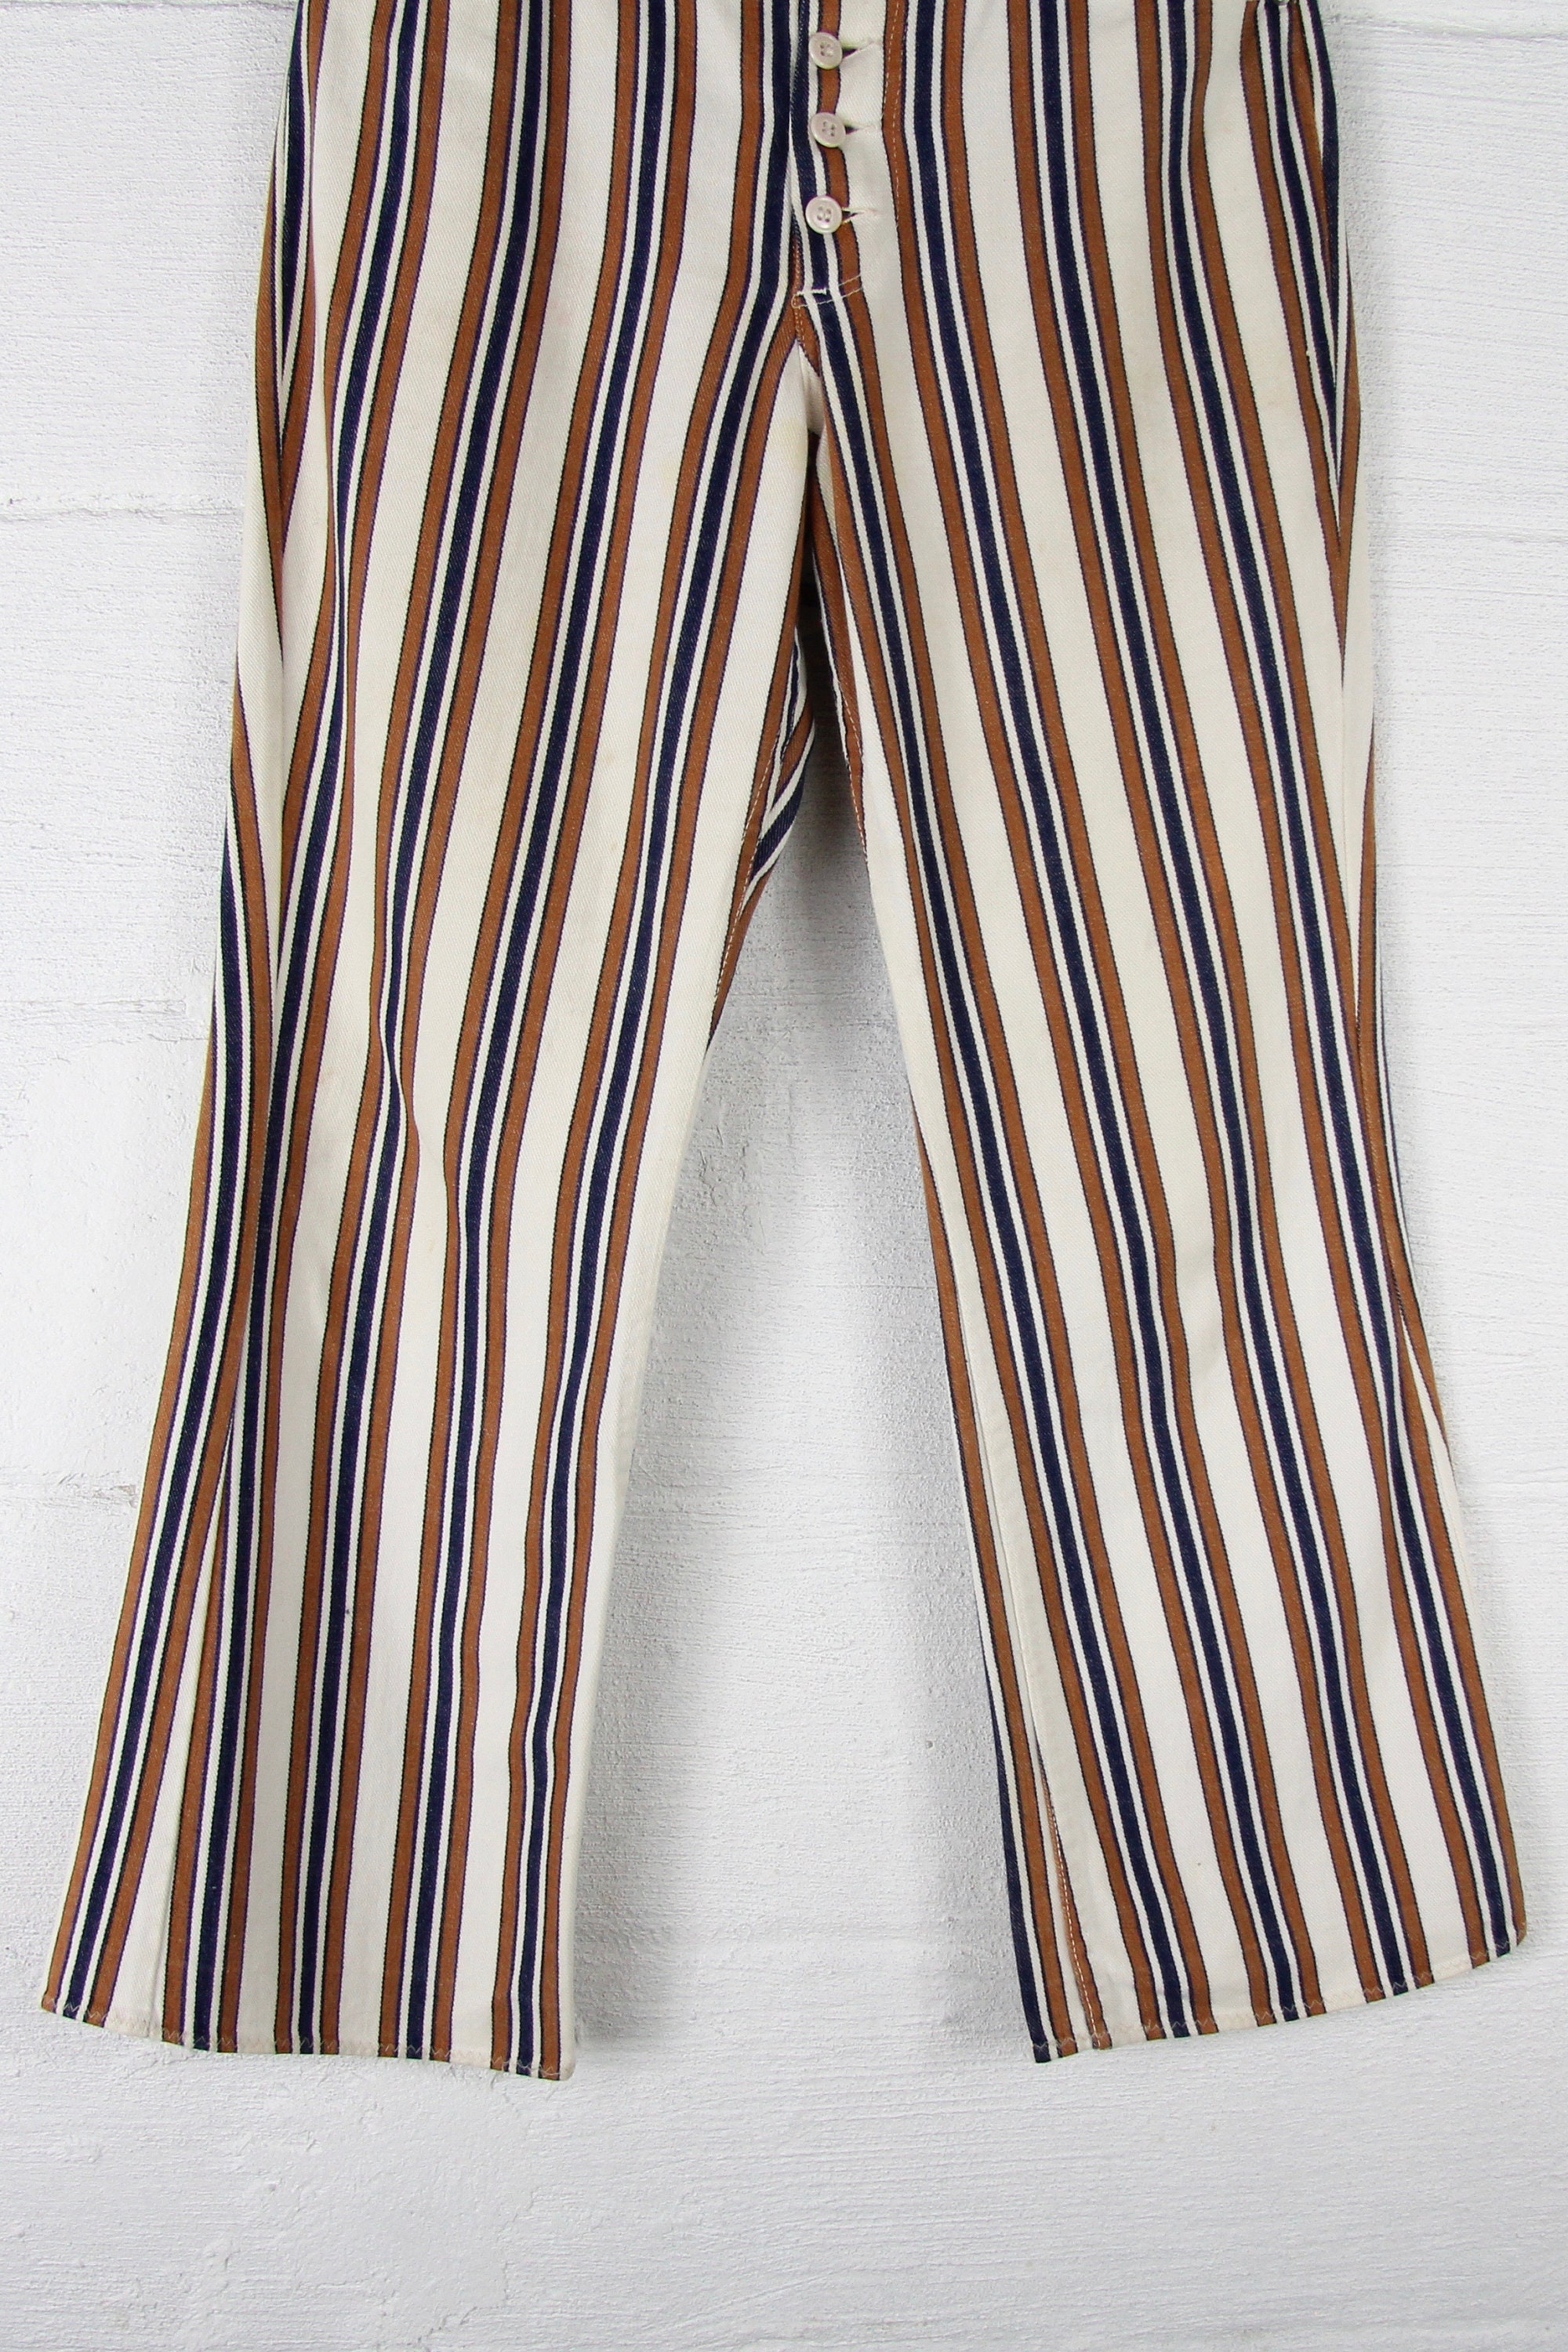 RARE 70s Striped Maverick Jeans Bellbottoms Men's Vintage Seventies ...